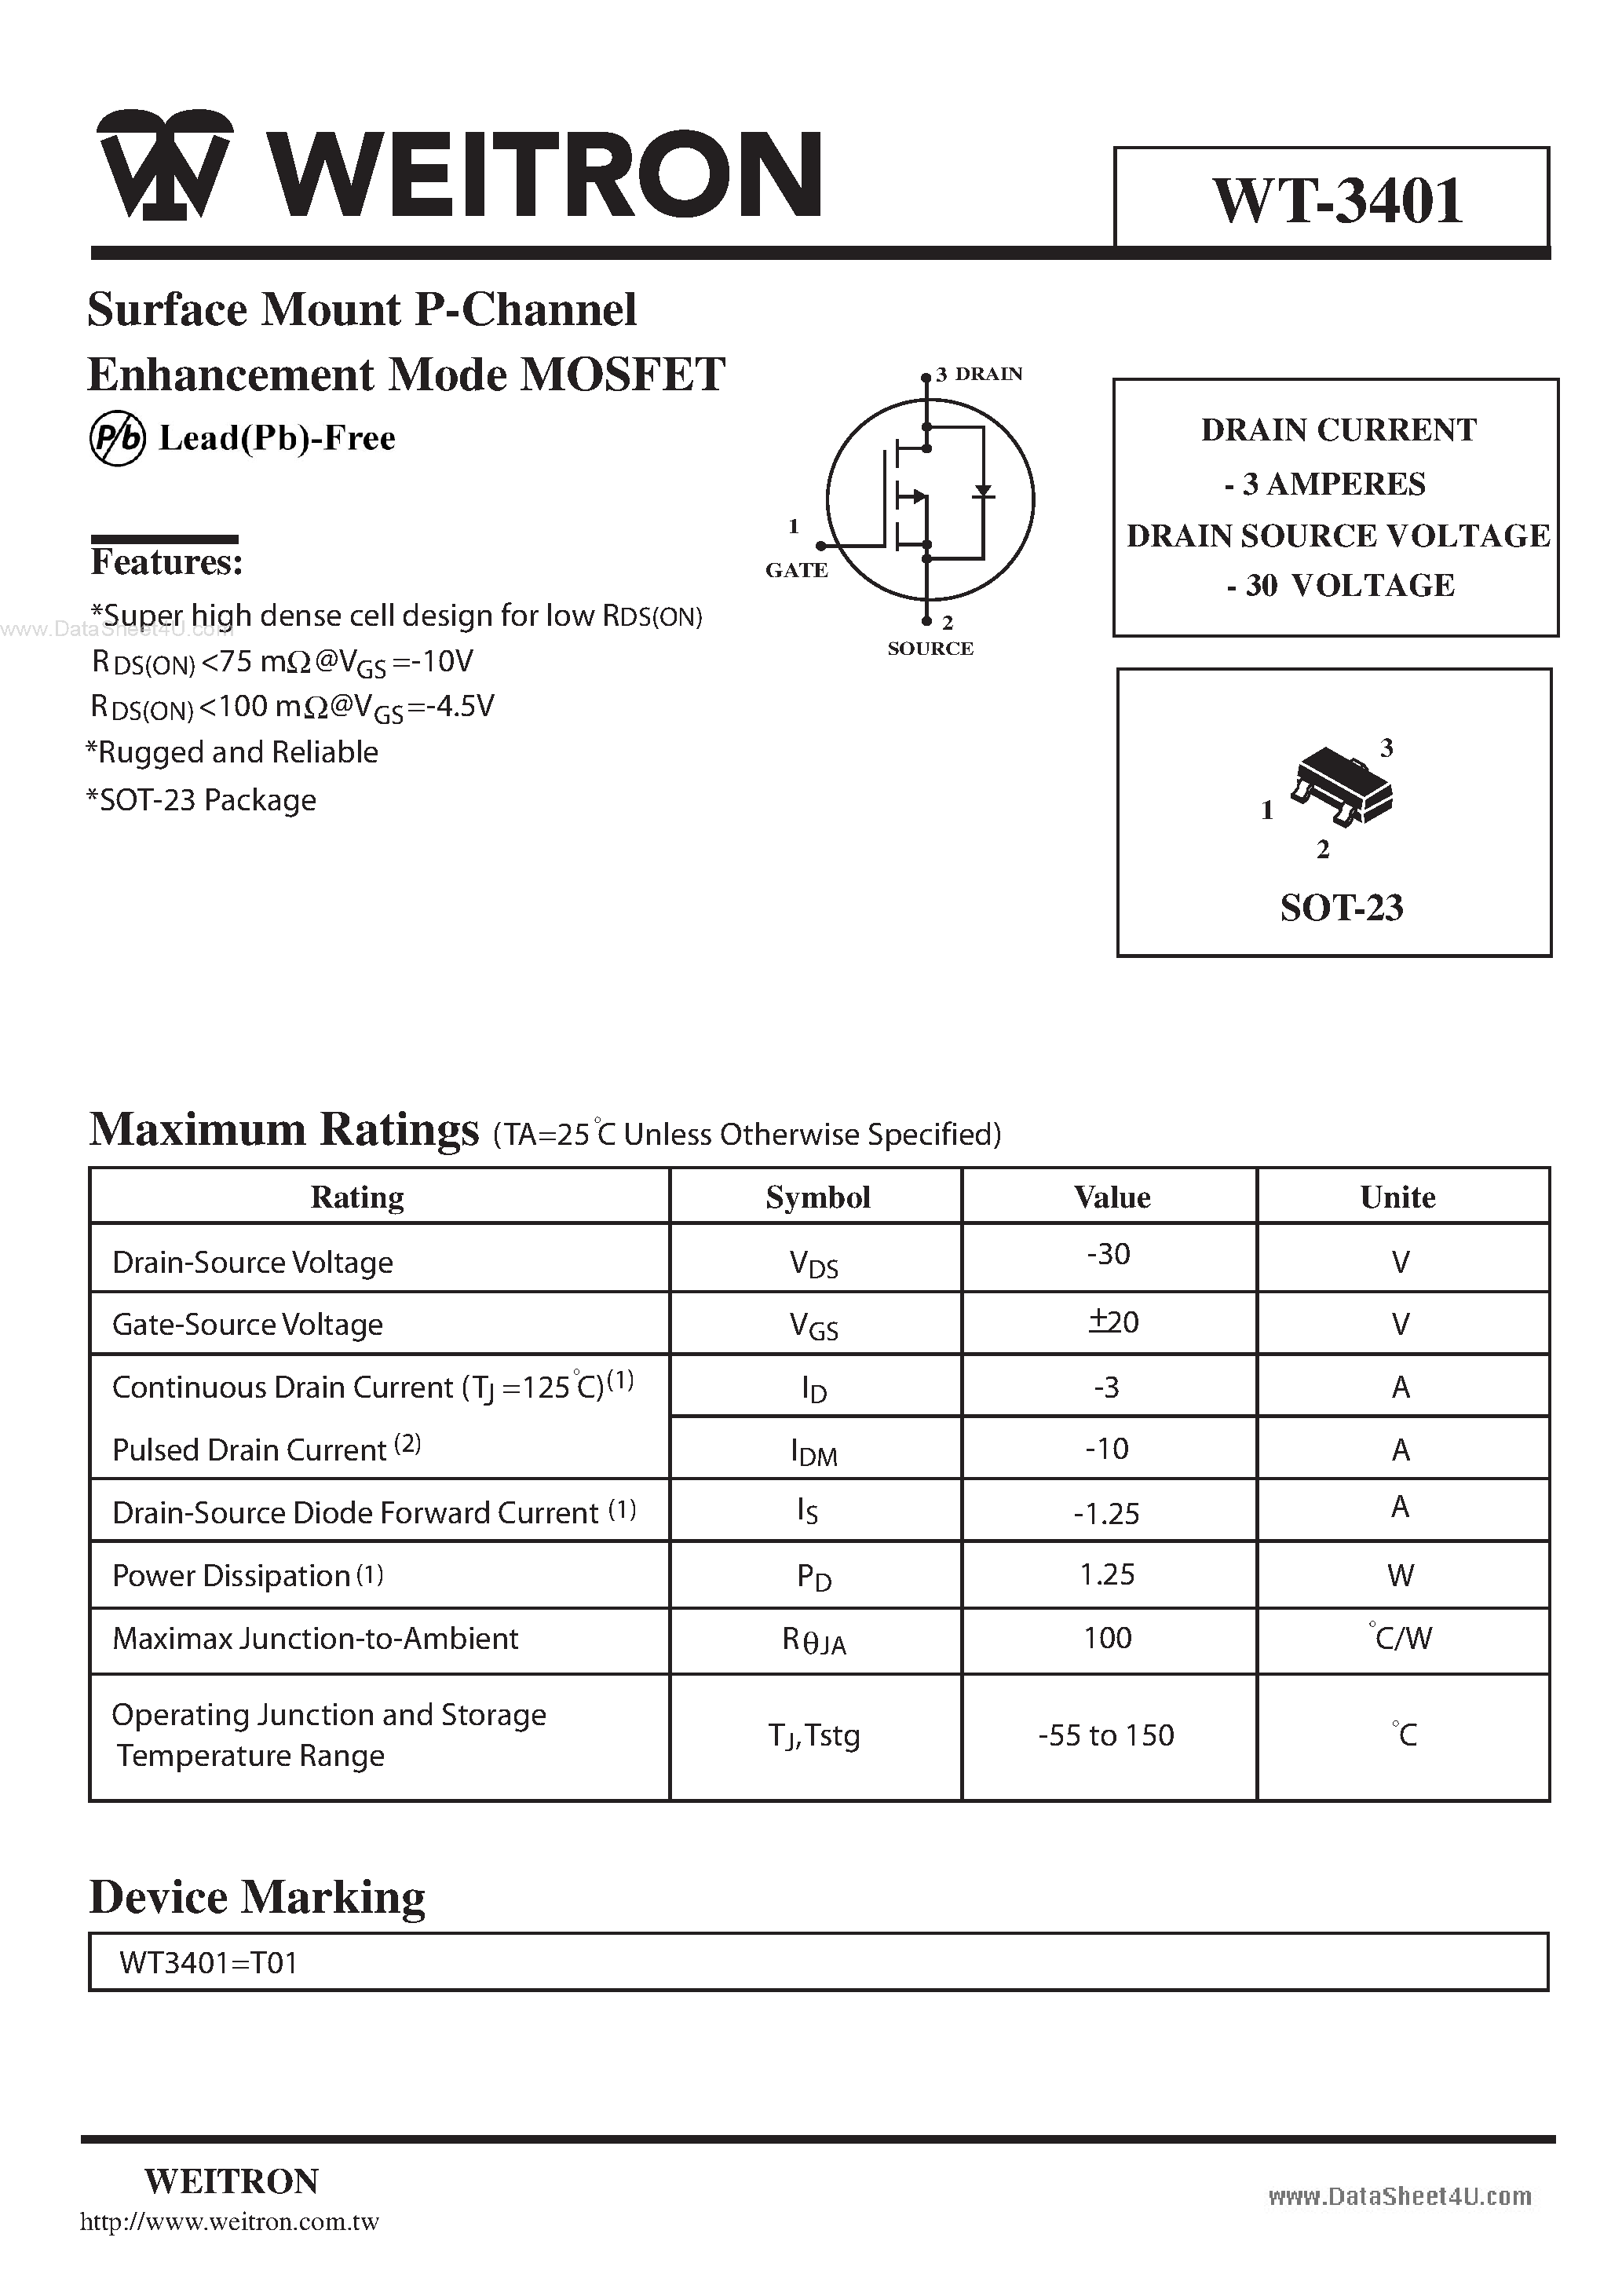 Datasheet WT3401 - Surface Mount P-Channel Enhancement Mode MOSFET page 1